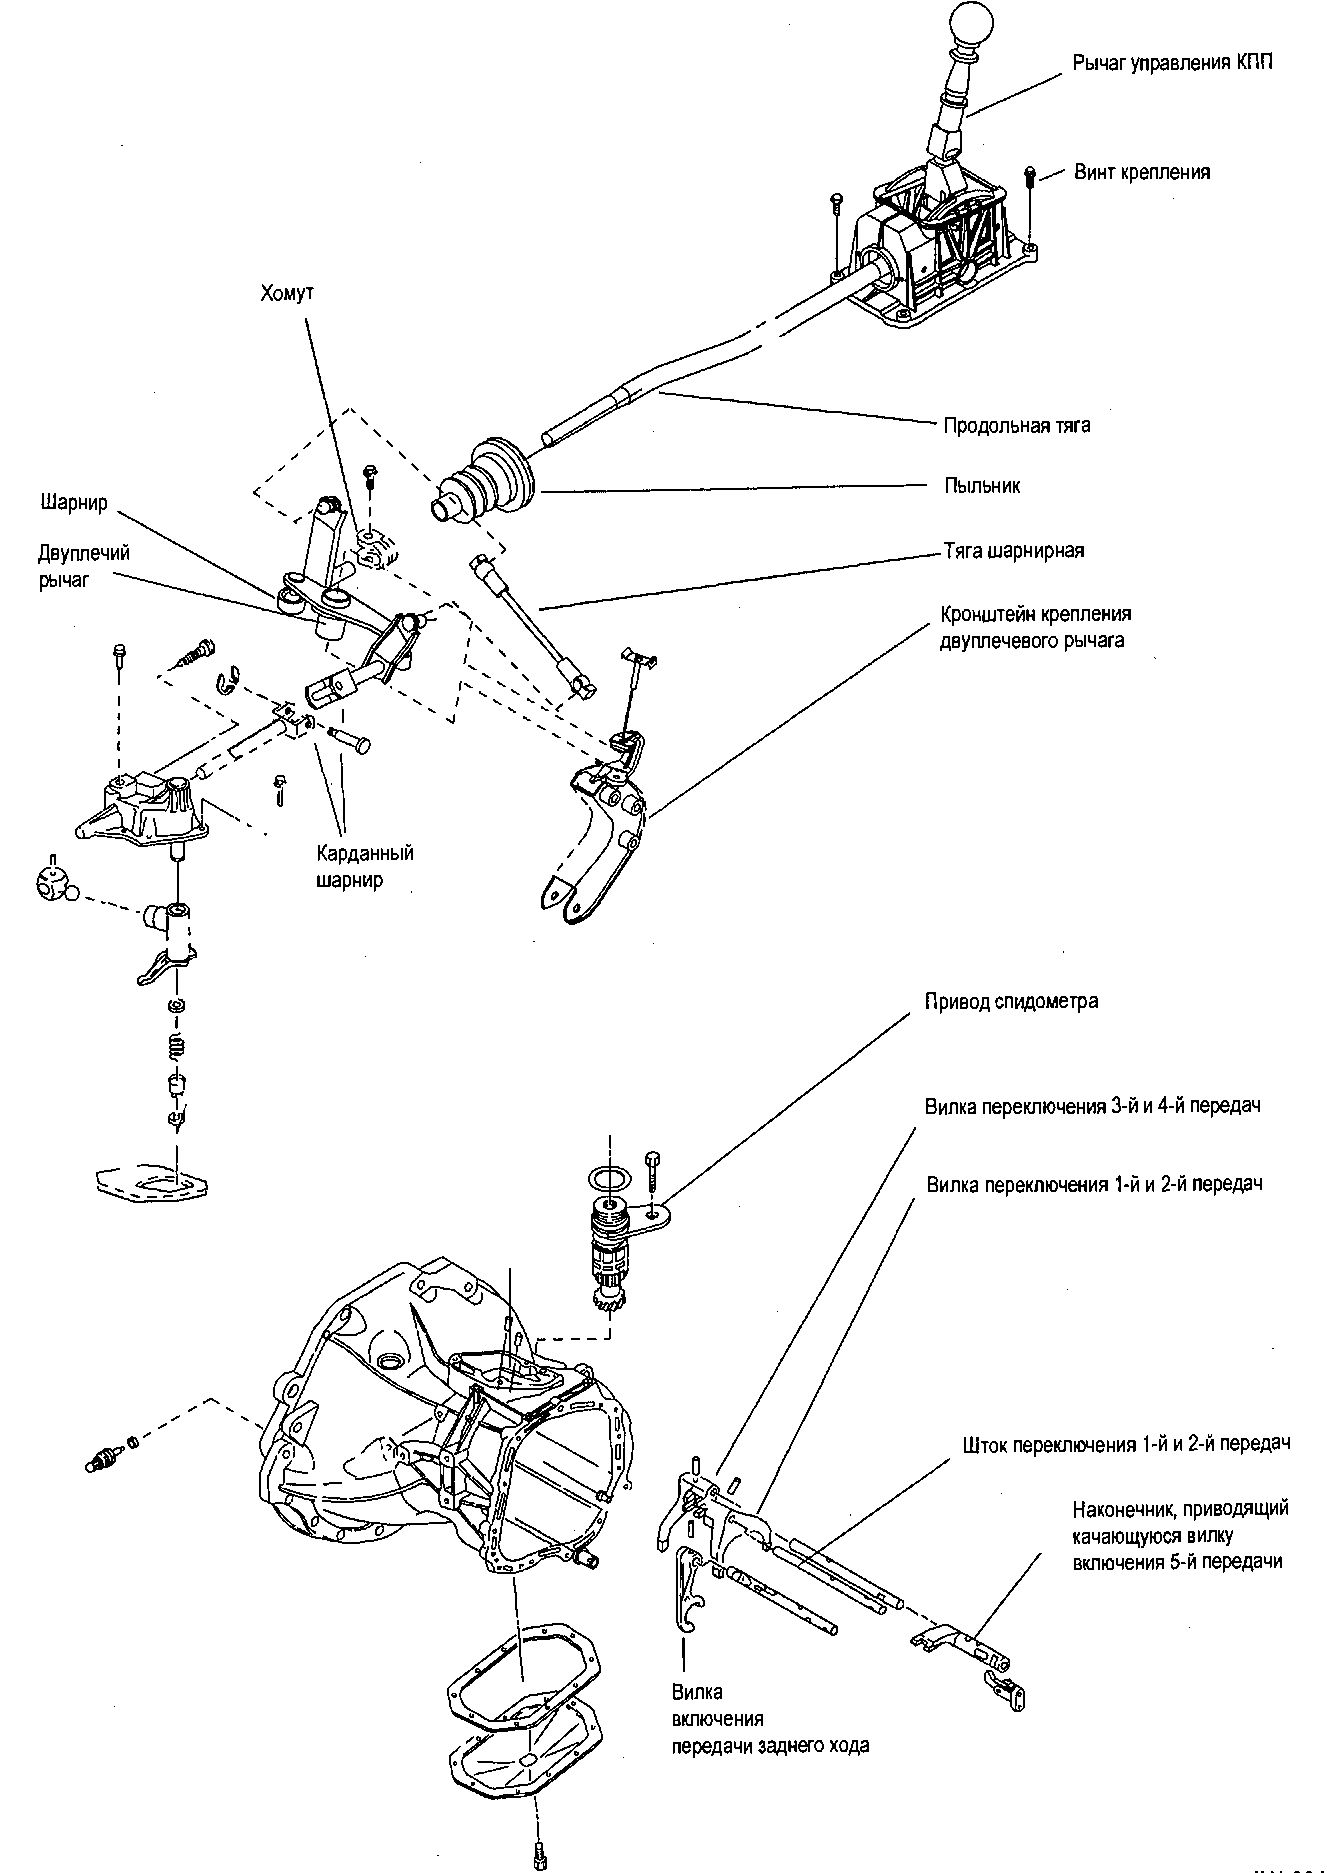 4.1.4 Привод механизма переключения передач Chevrolet Aveo 2003-2008